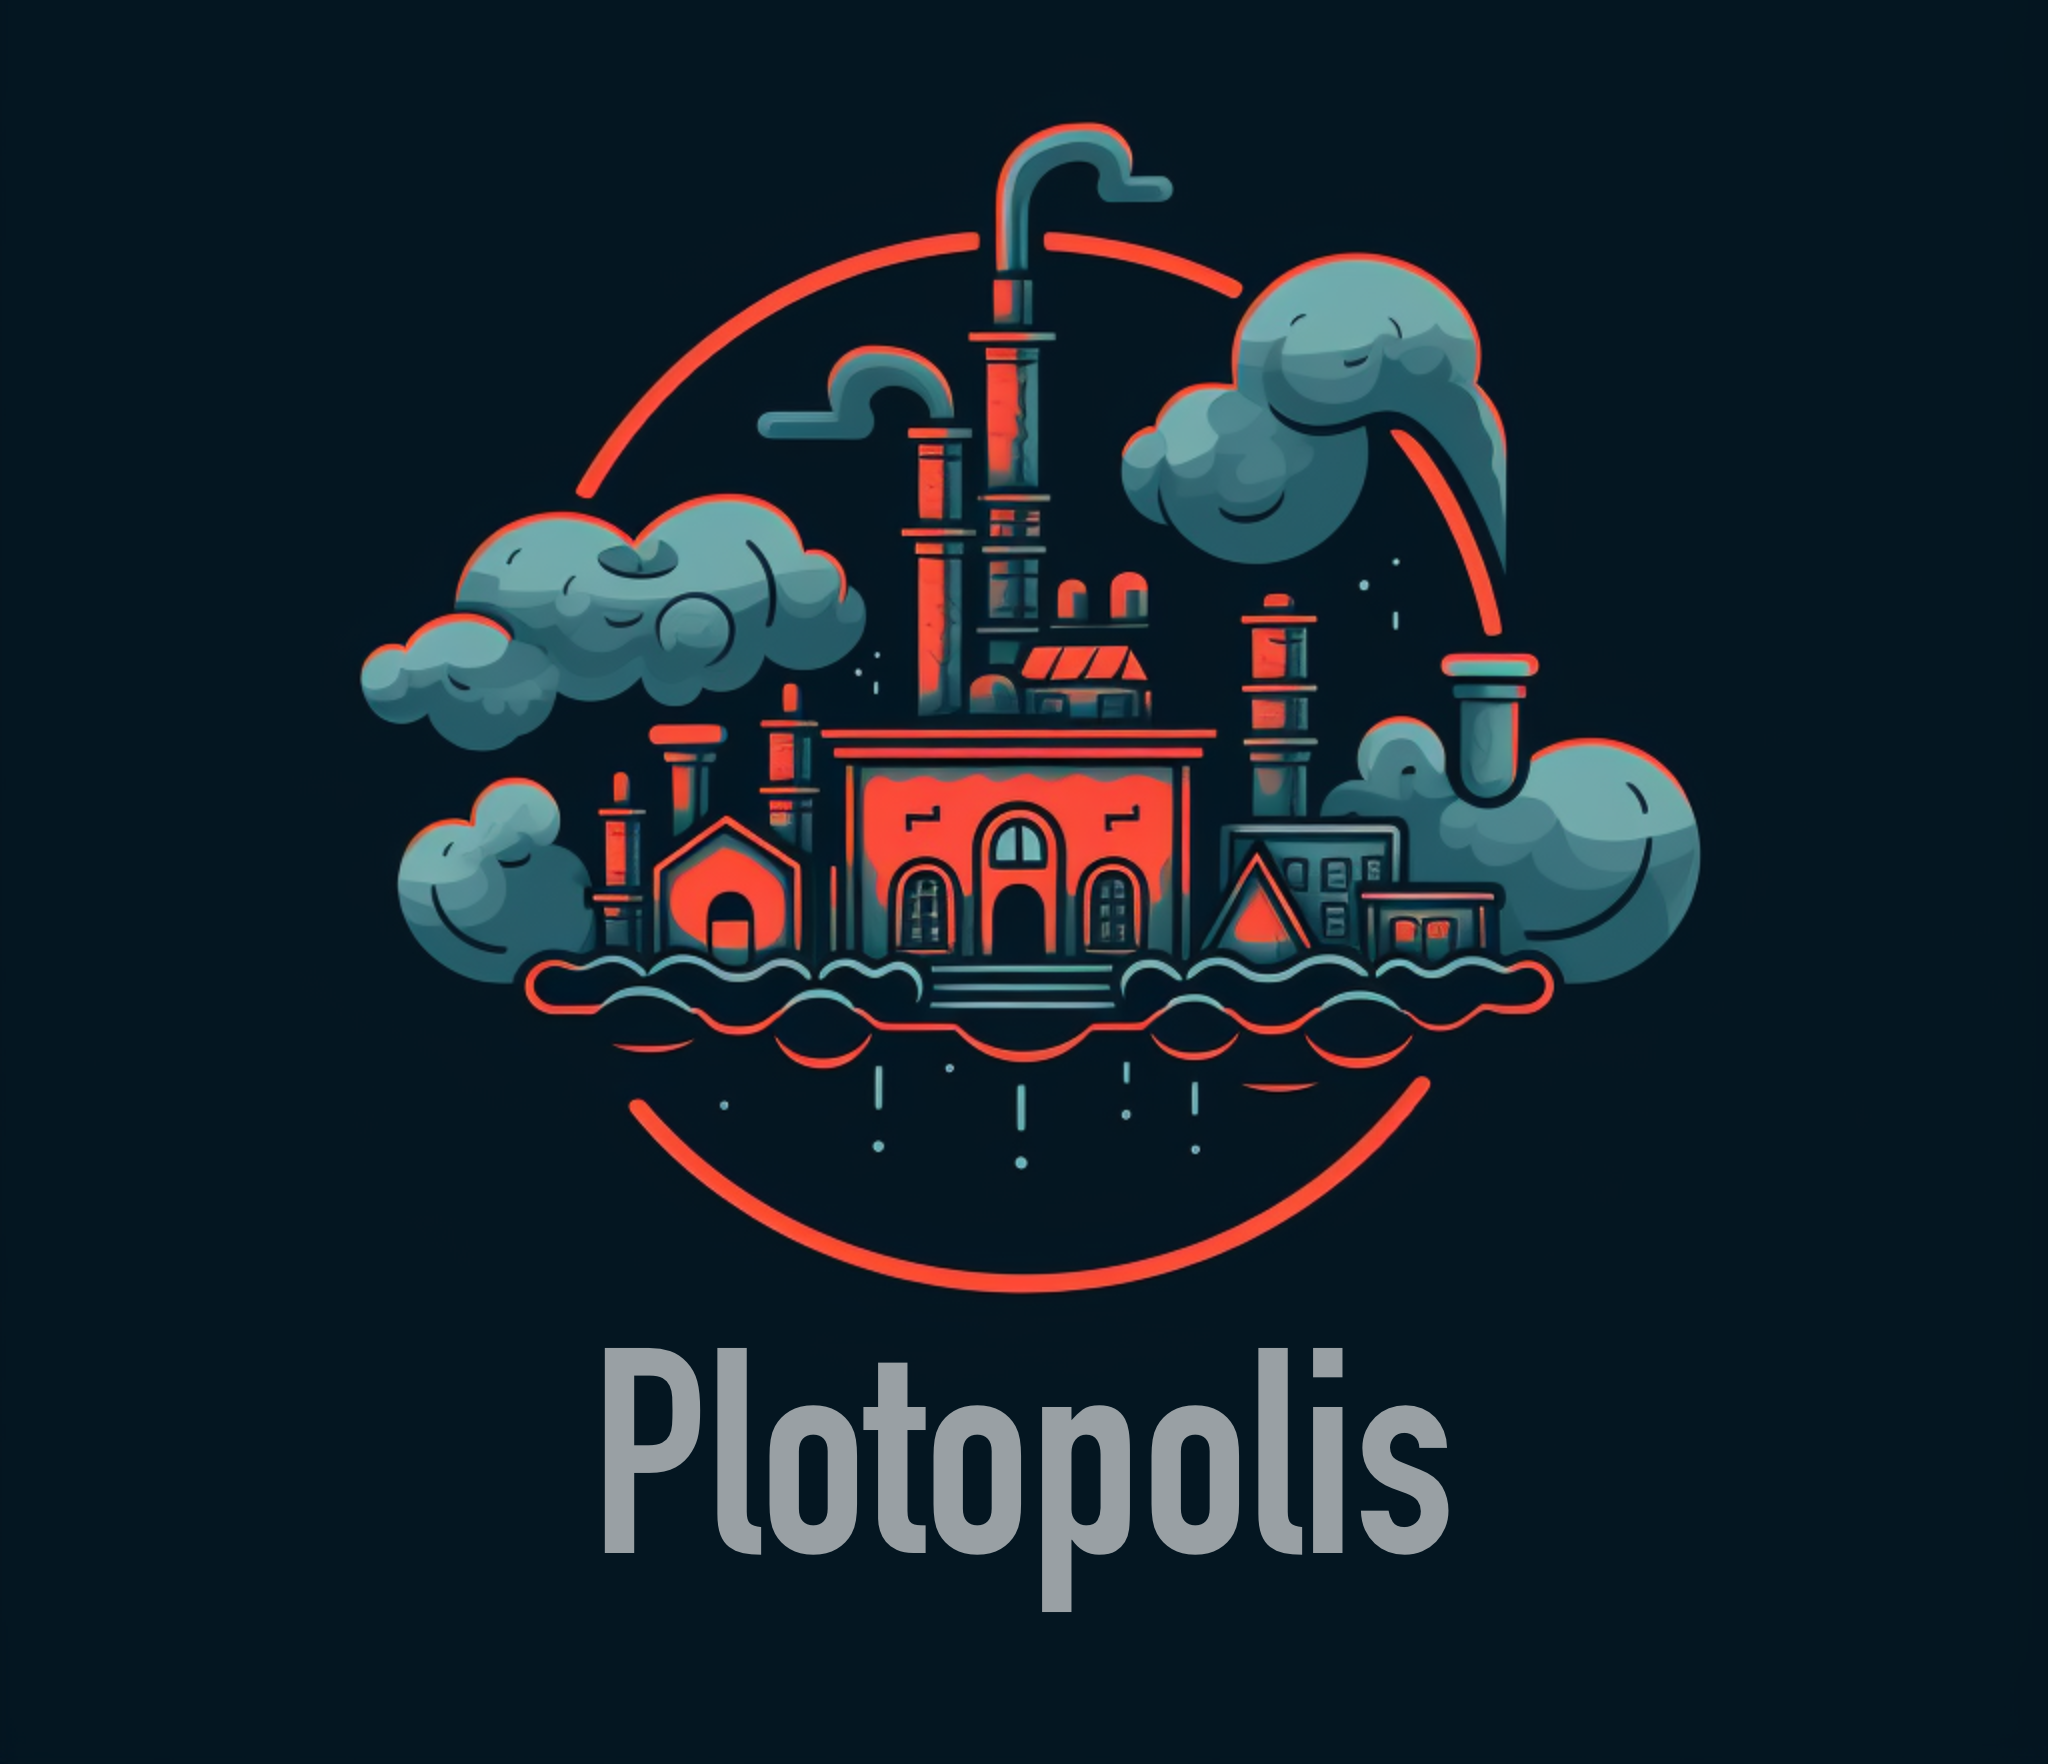 Plotopolis - a journal of interactive fiction